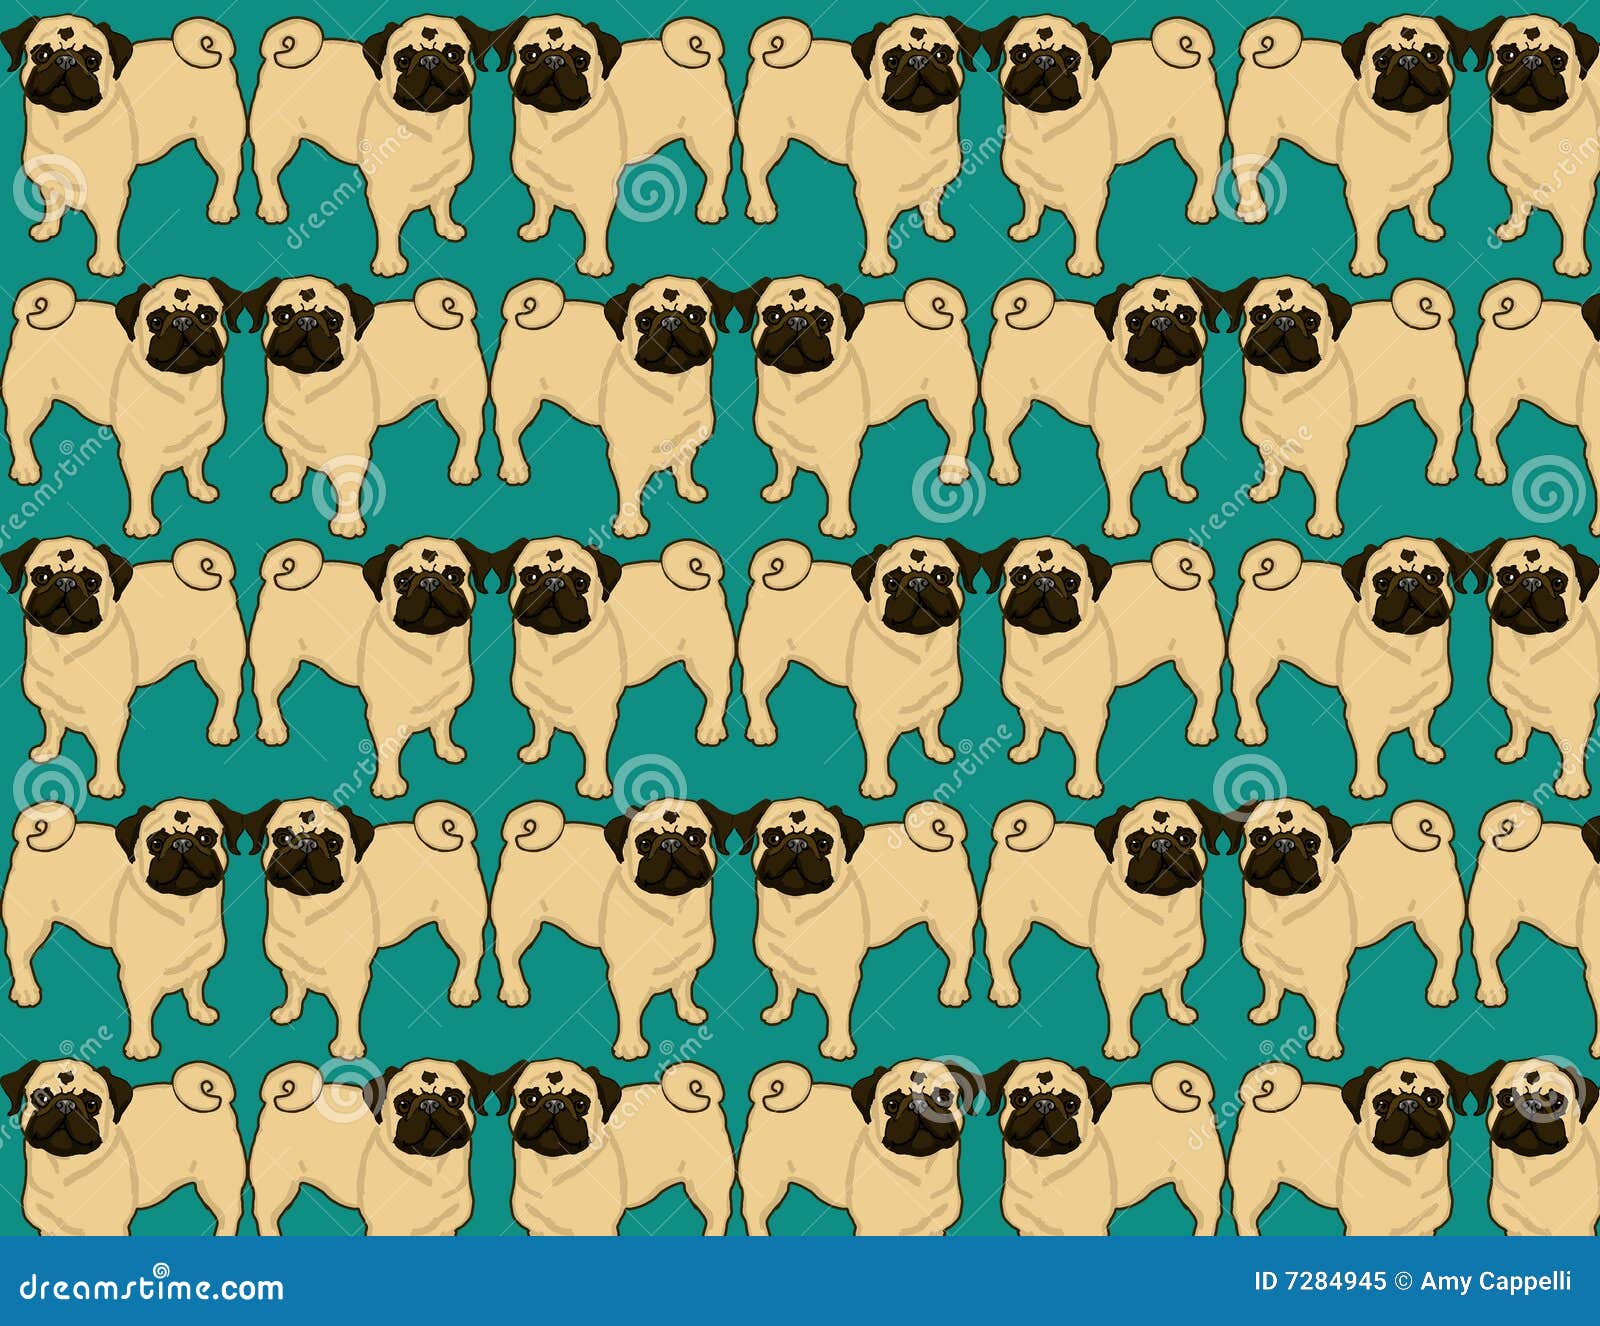 Pug Wallpaper stock illustration. Illustration of pets - 7284945